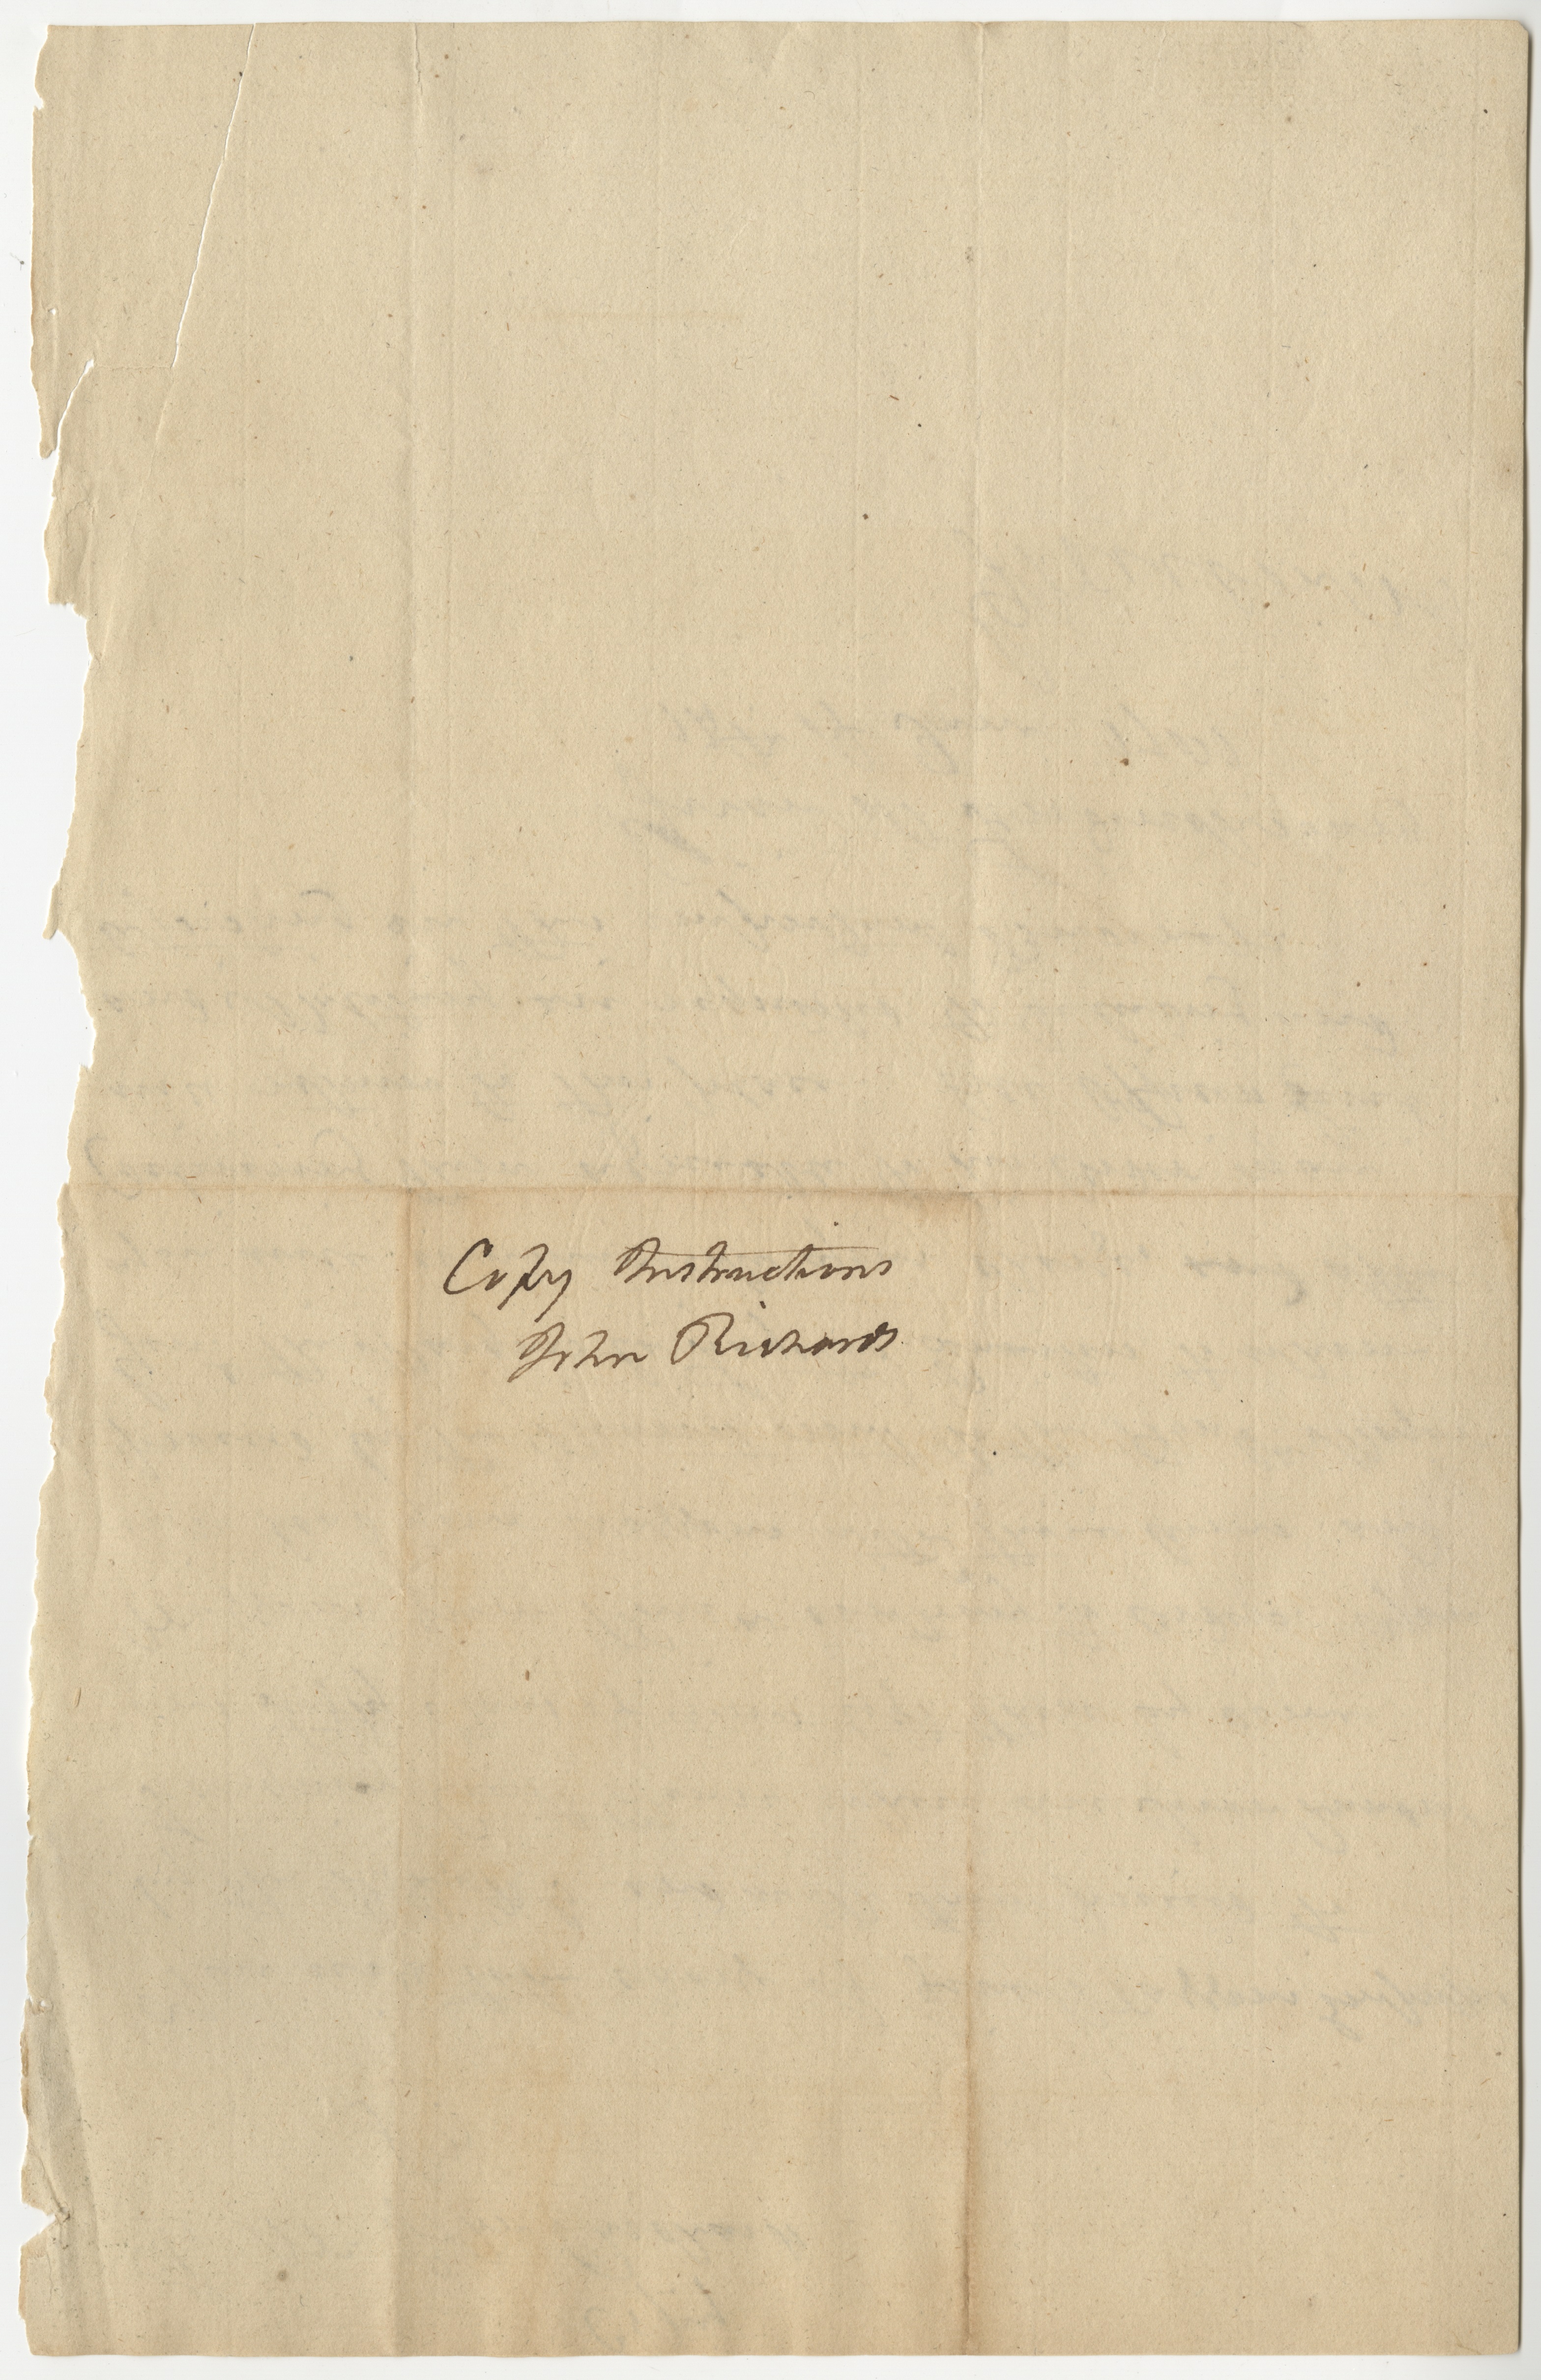 George Weedon to John Richards, June 14, 1781